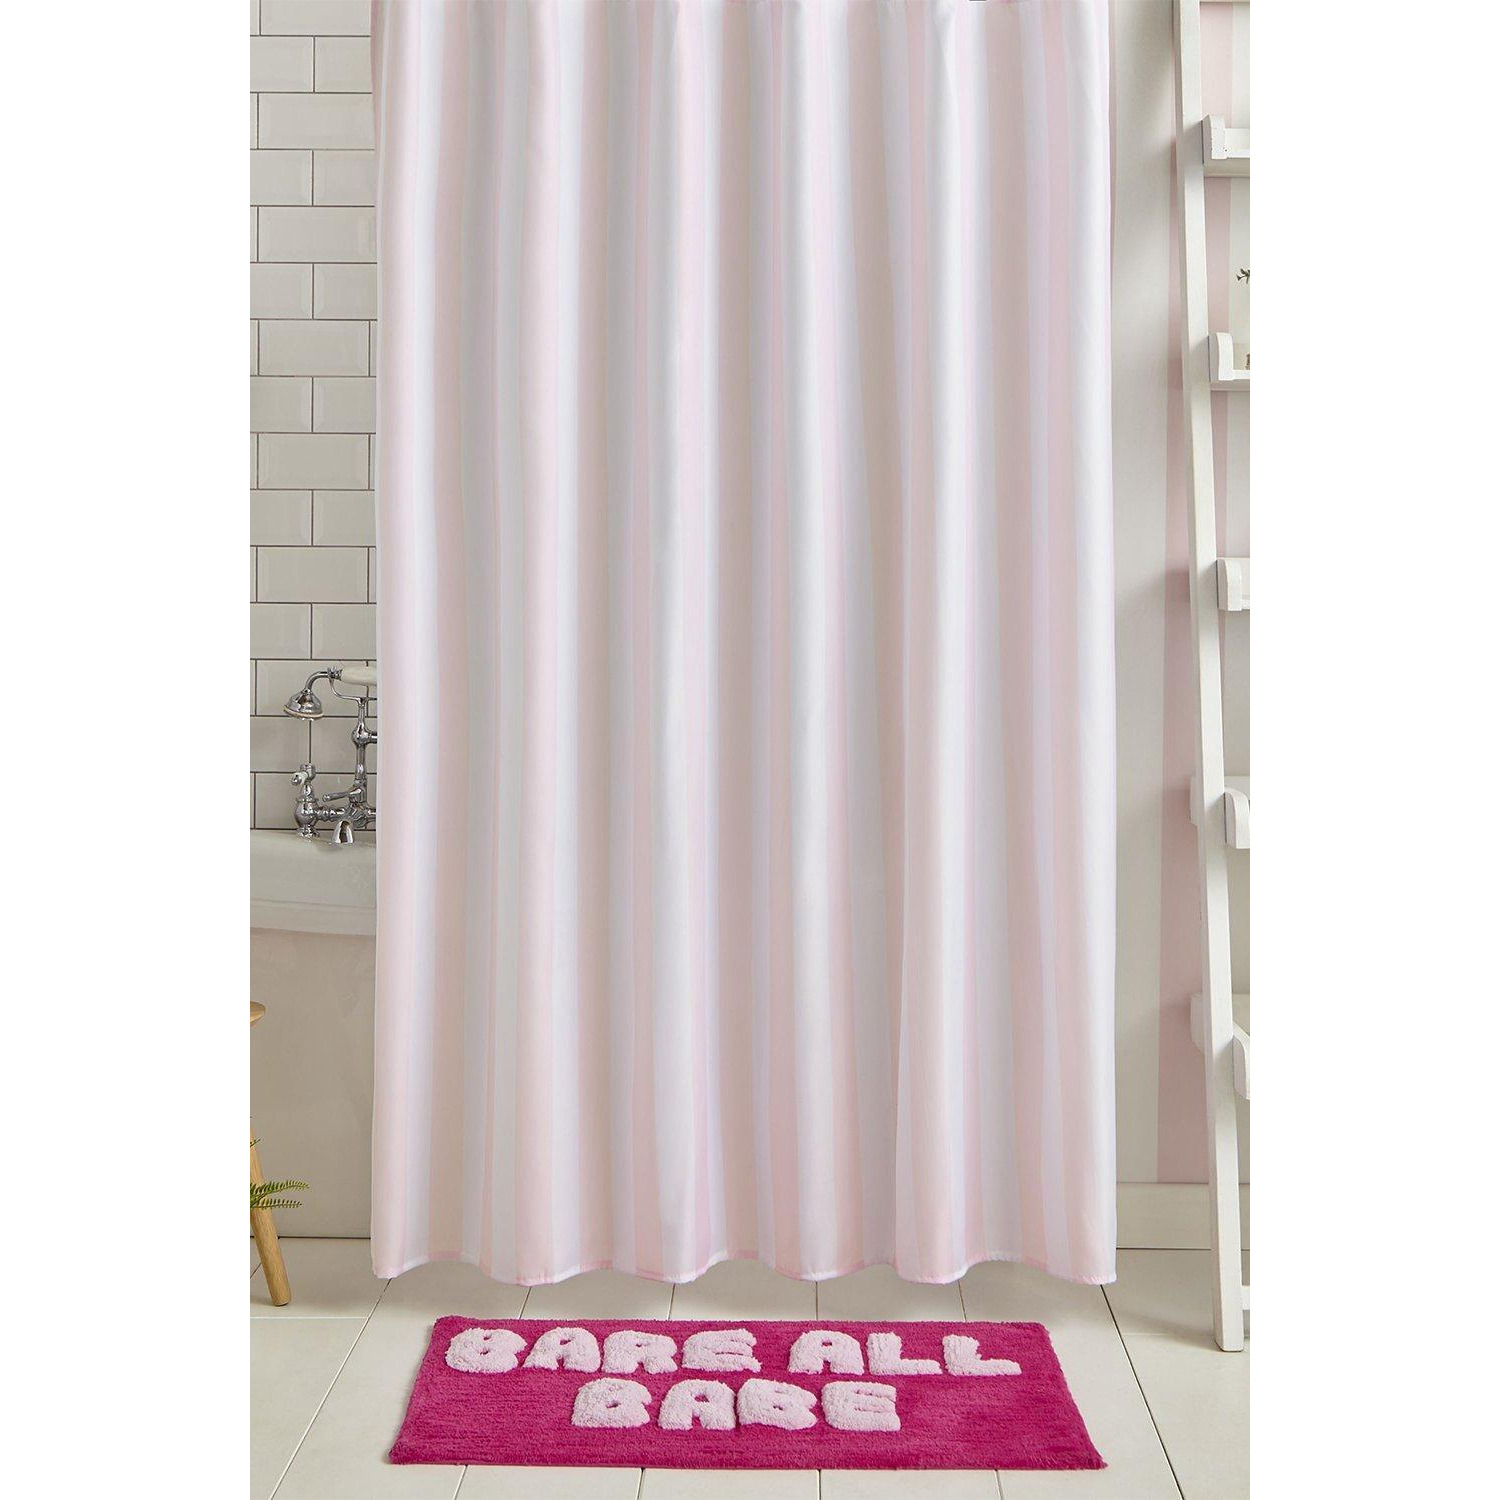 'Stripe Tease' Shower Curtain - image 1